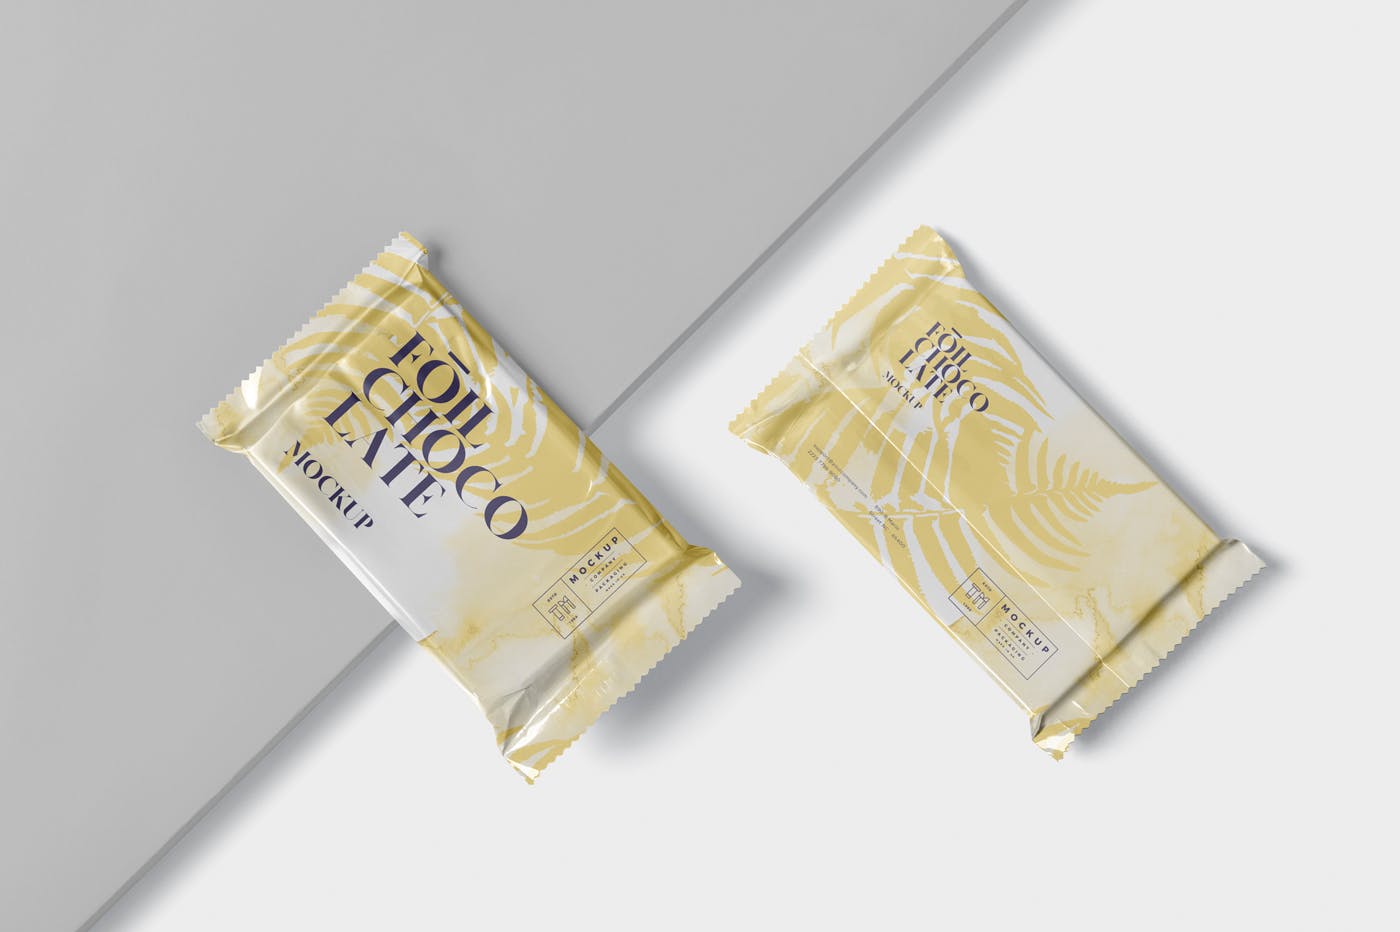 巧克力超薄铝箔纸包装设计效果图素材中国精选 Foil Chocolate Packaging Mockup – Slim Size插图(2)